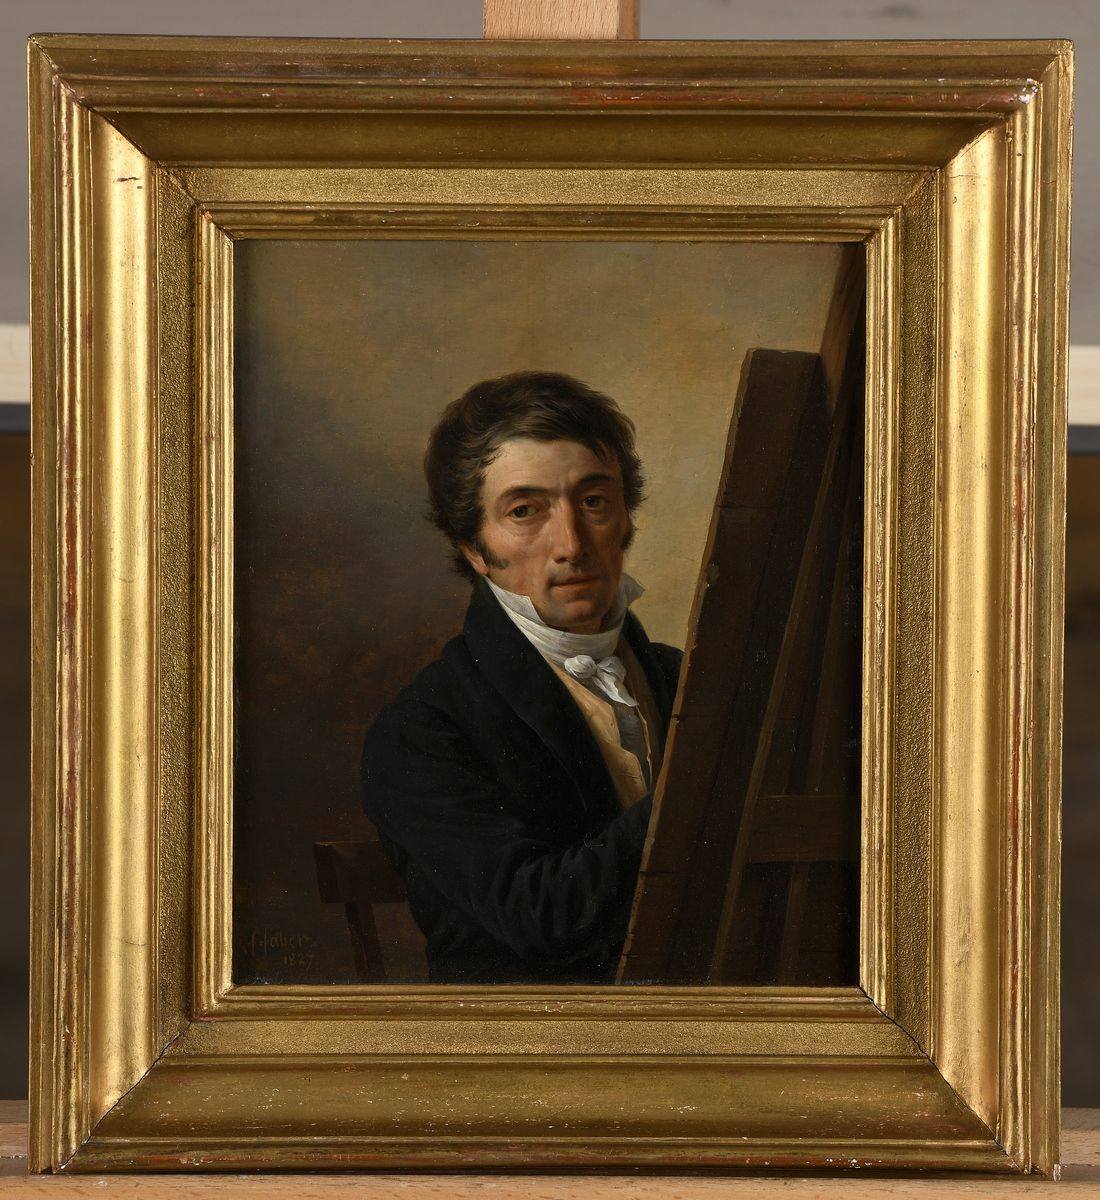 Null FABER Friedrich Theodor					
Bruxelles 1782 - id. ; 1844

Autoportrait au c&hellip;